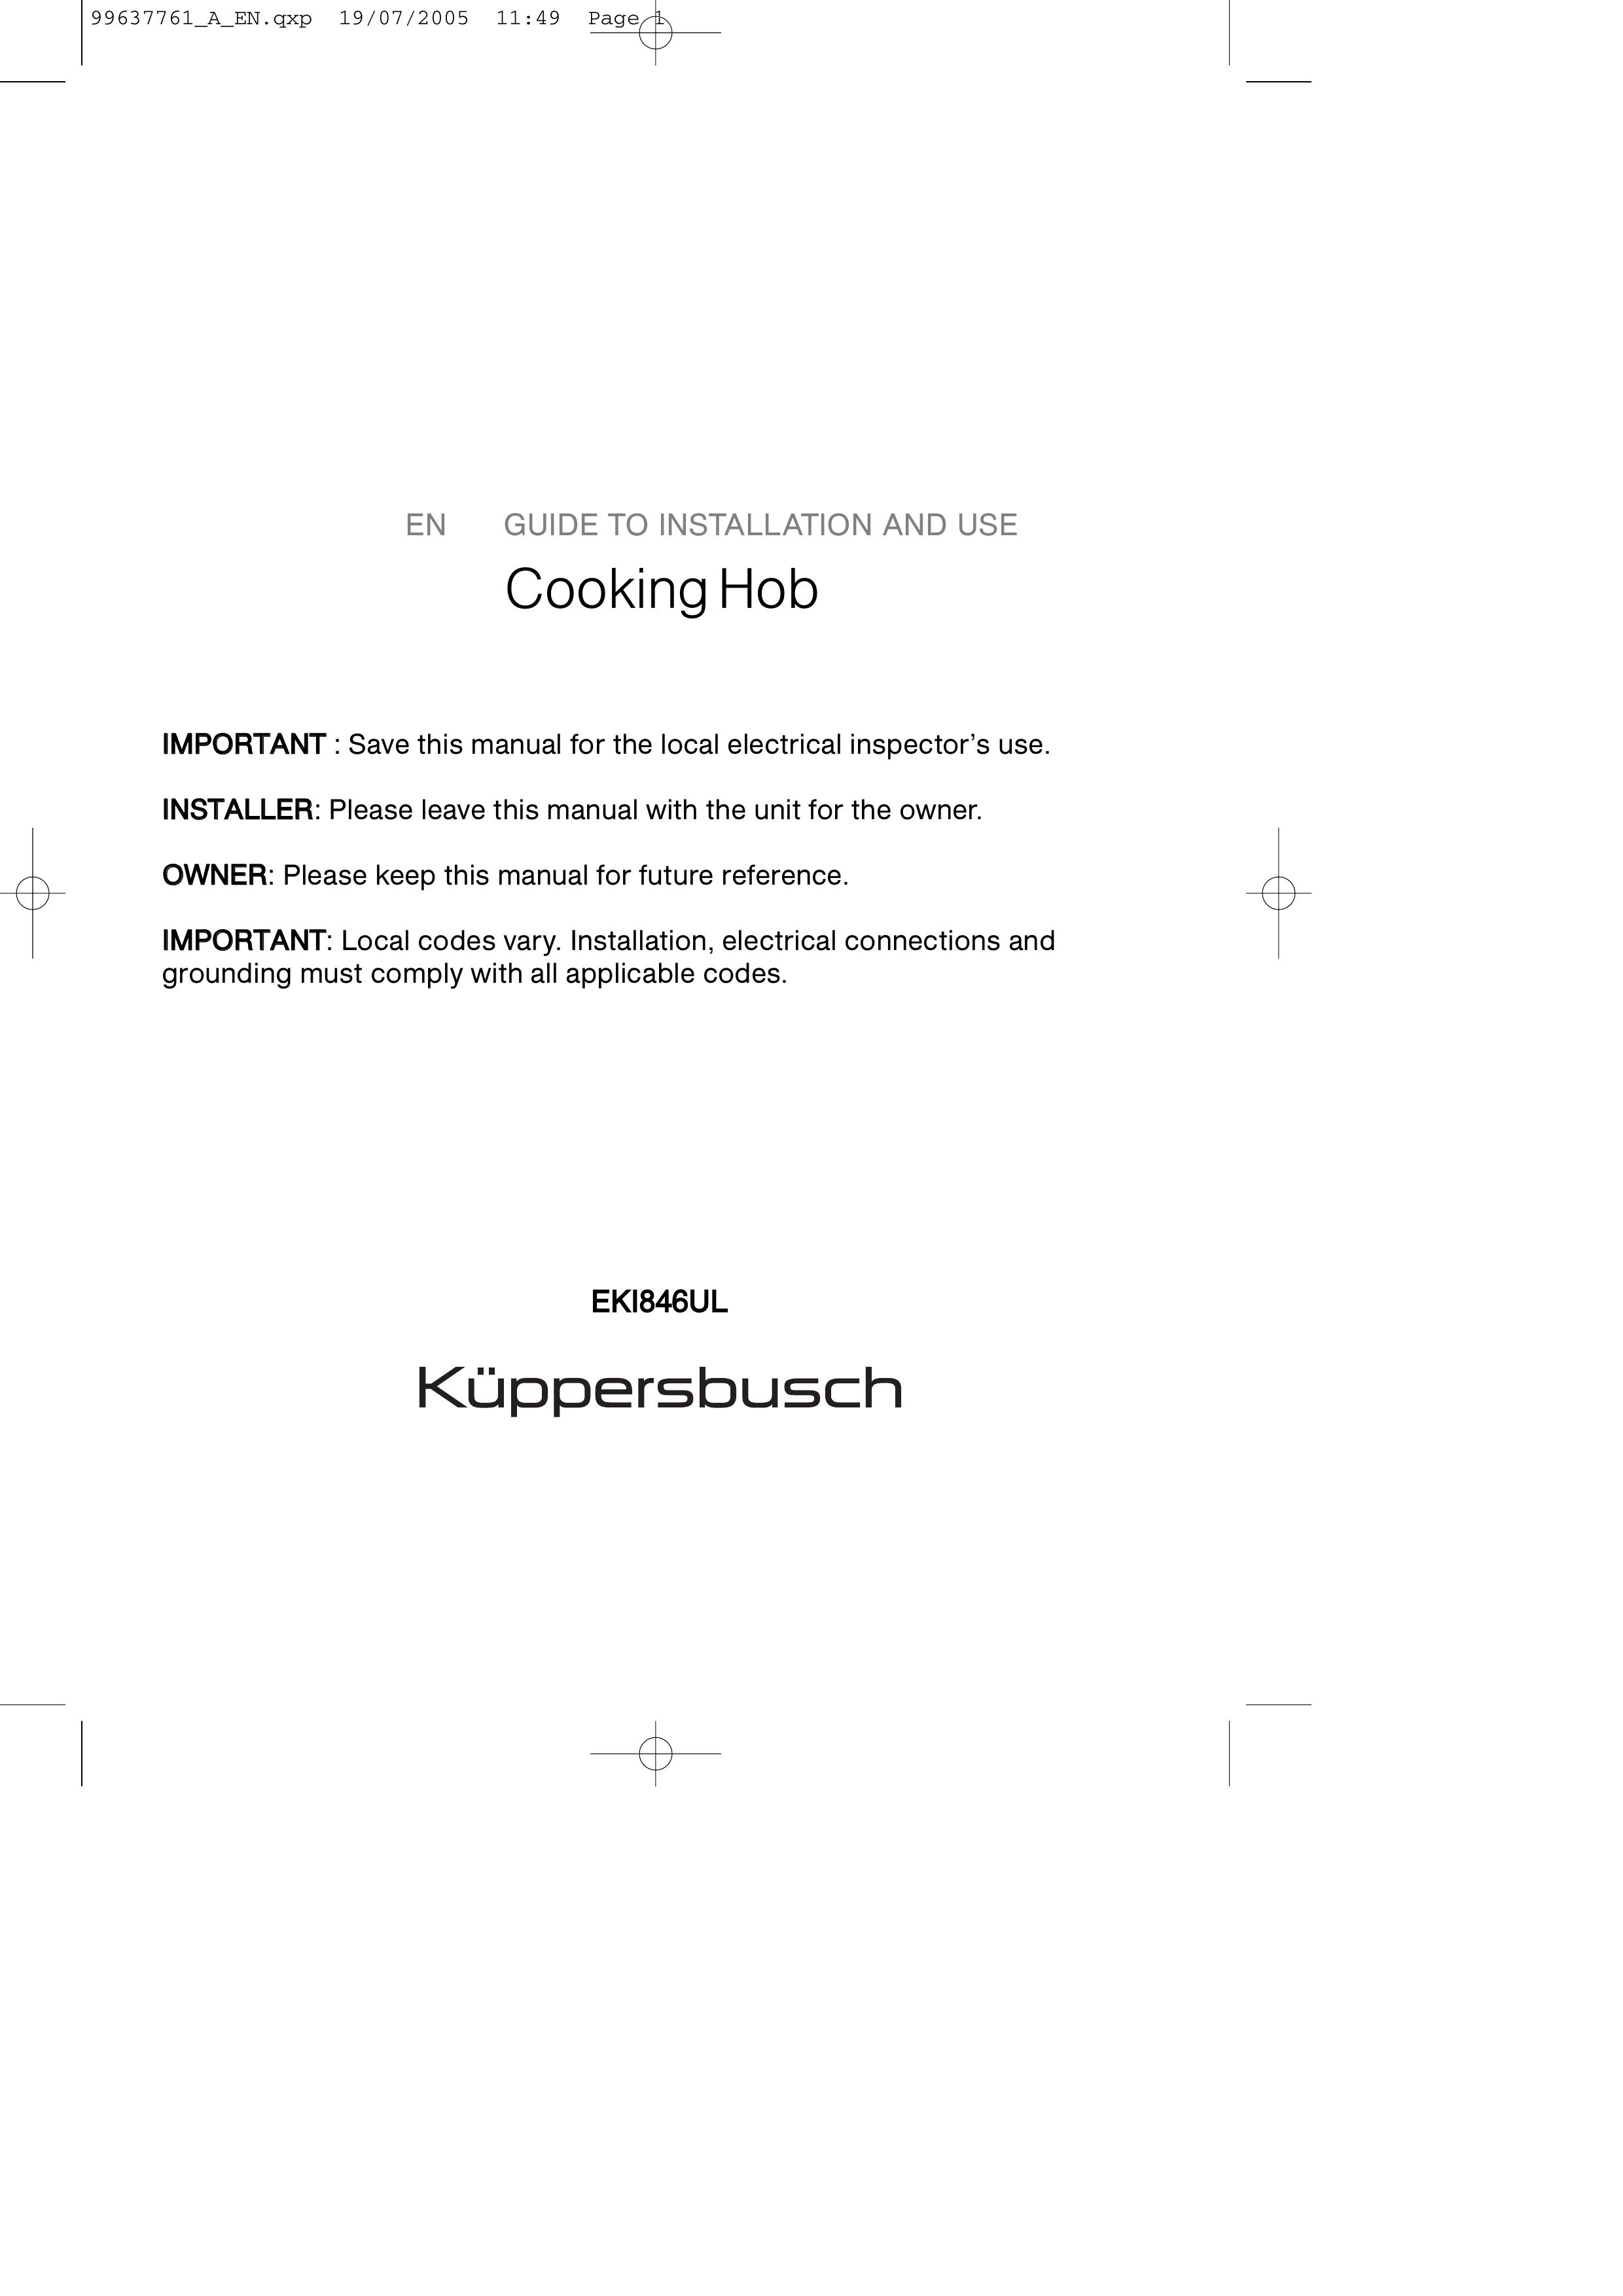 Kuppersbusch USA EKI846UL Slow Cooker User Manual